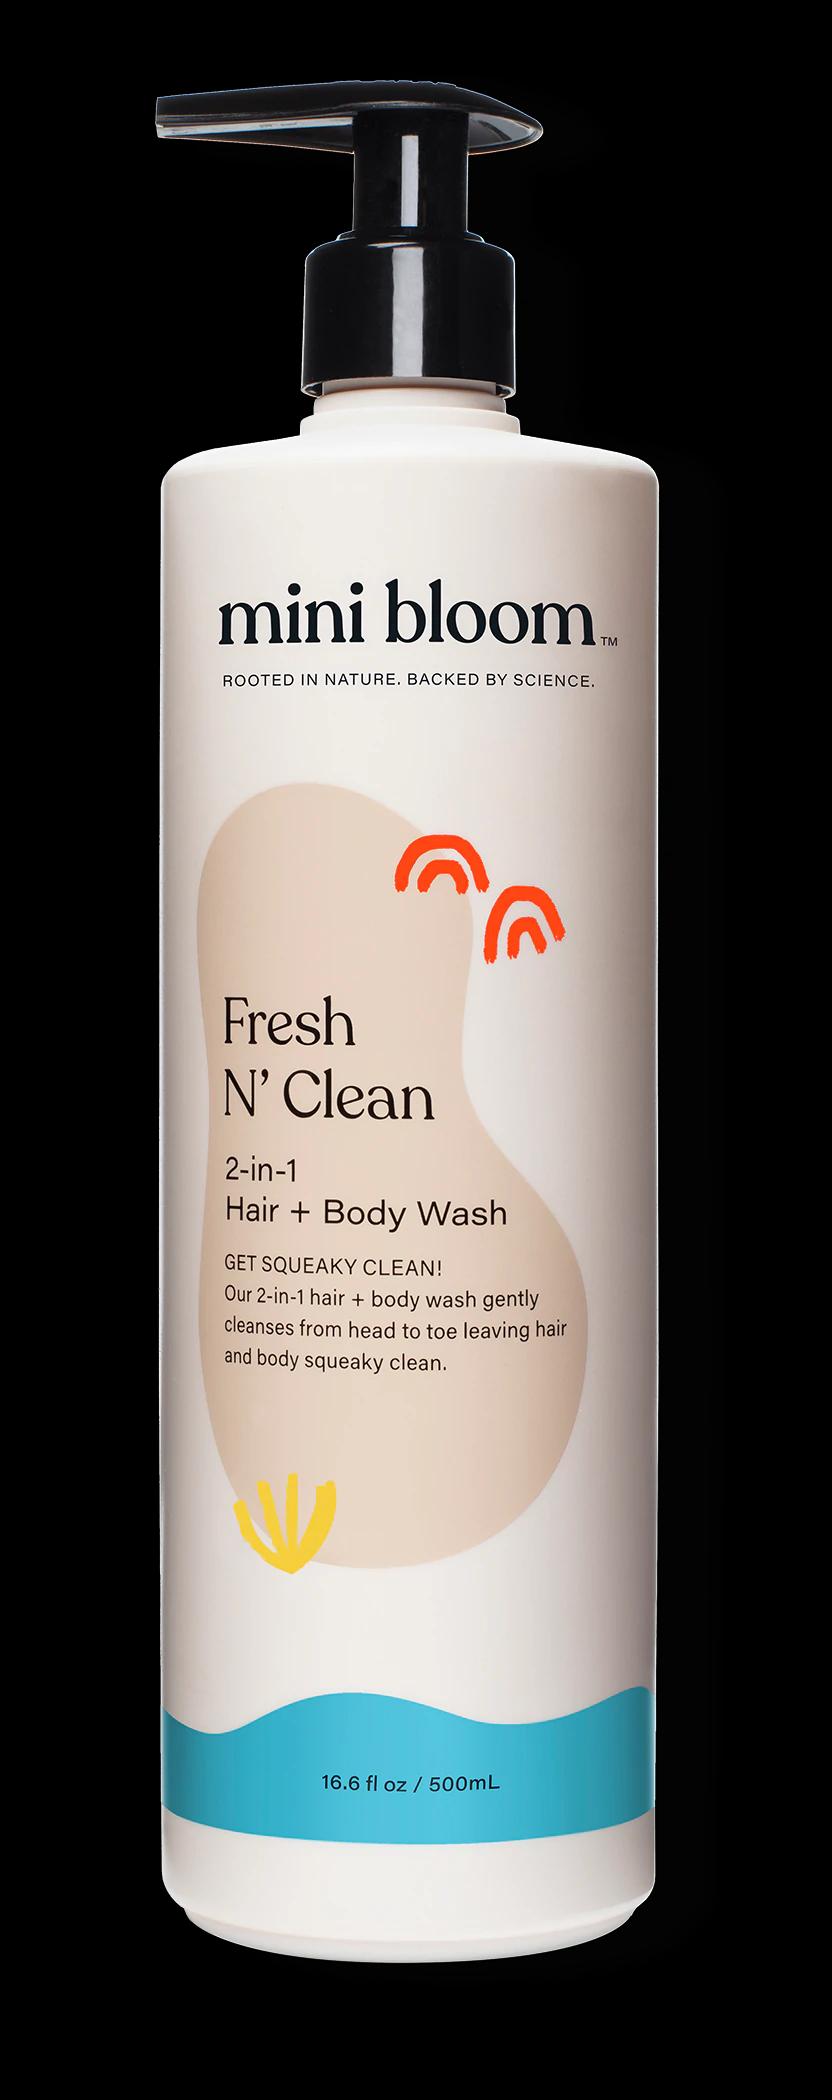 Mini Bloom Fresh N' Clean Hair + Body Wash